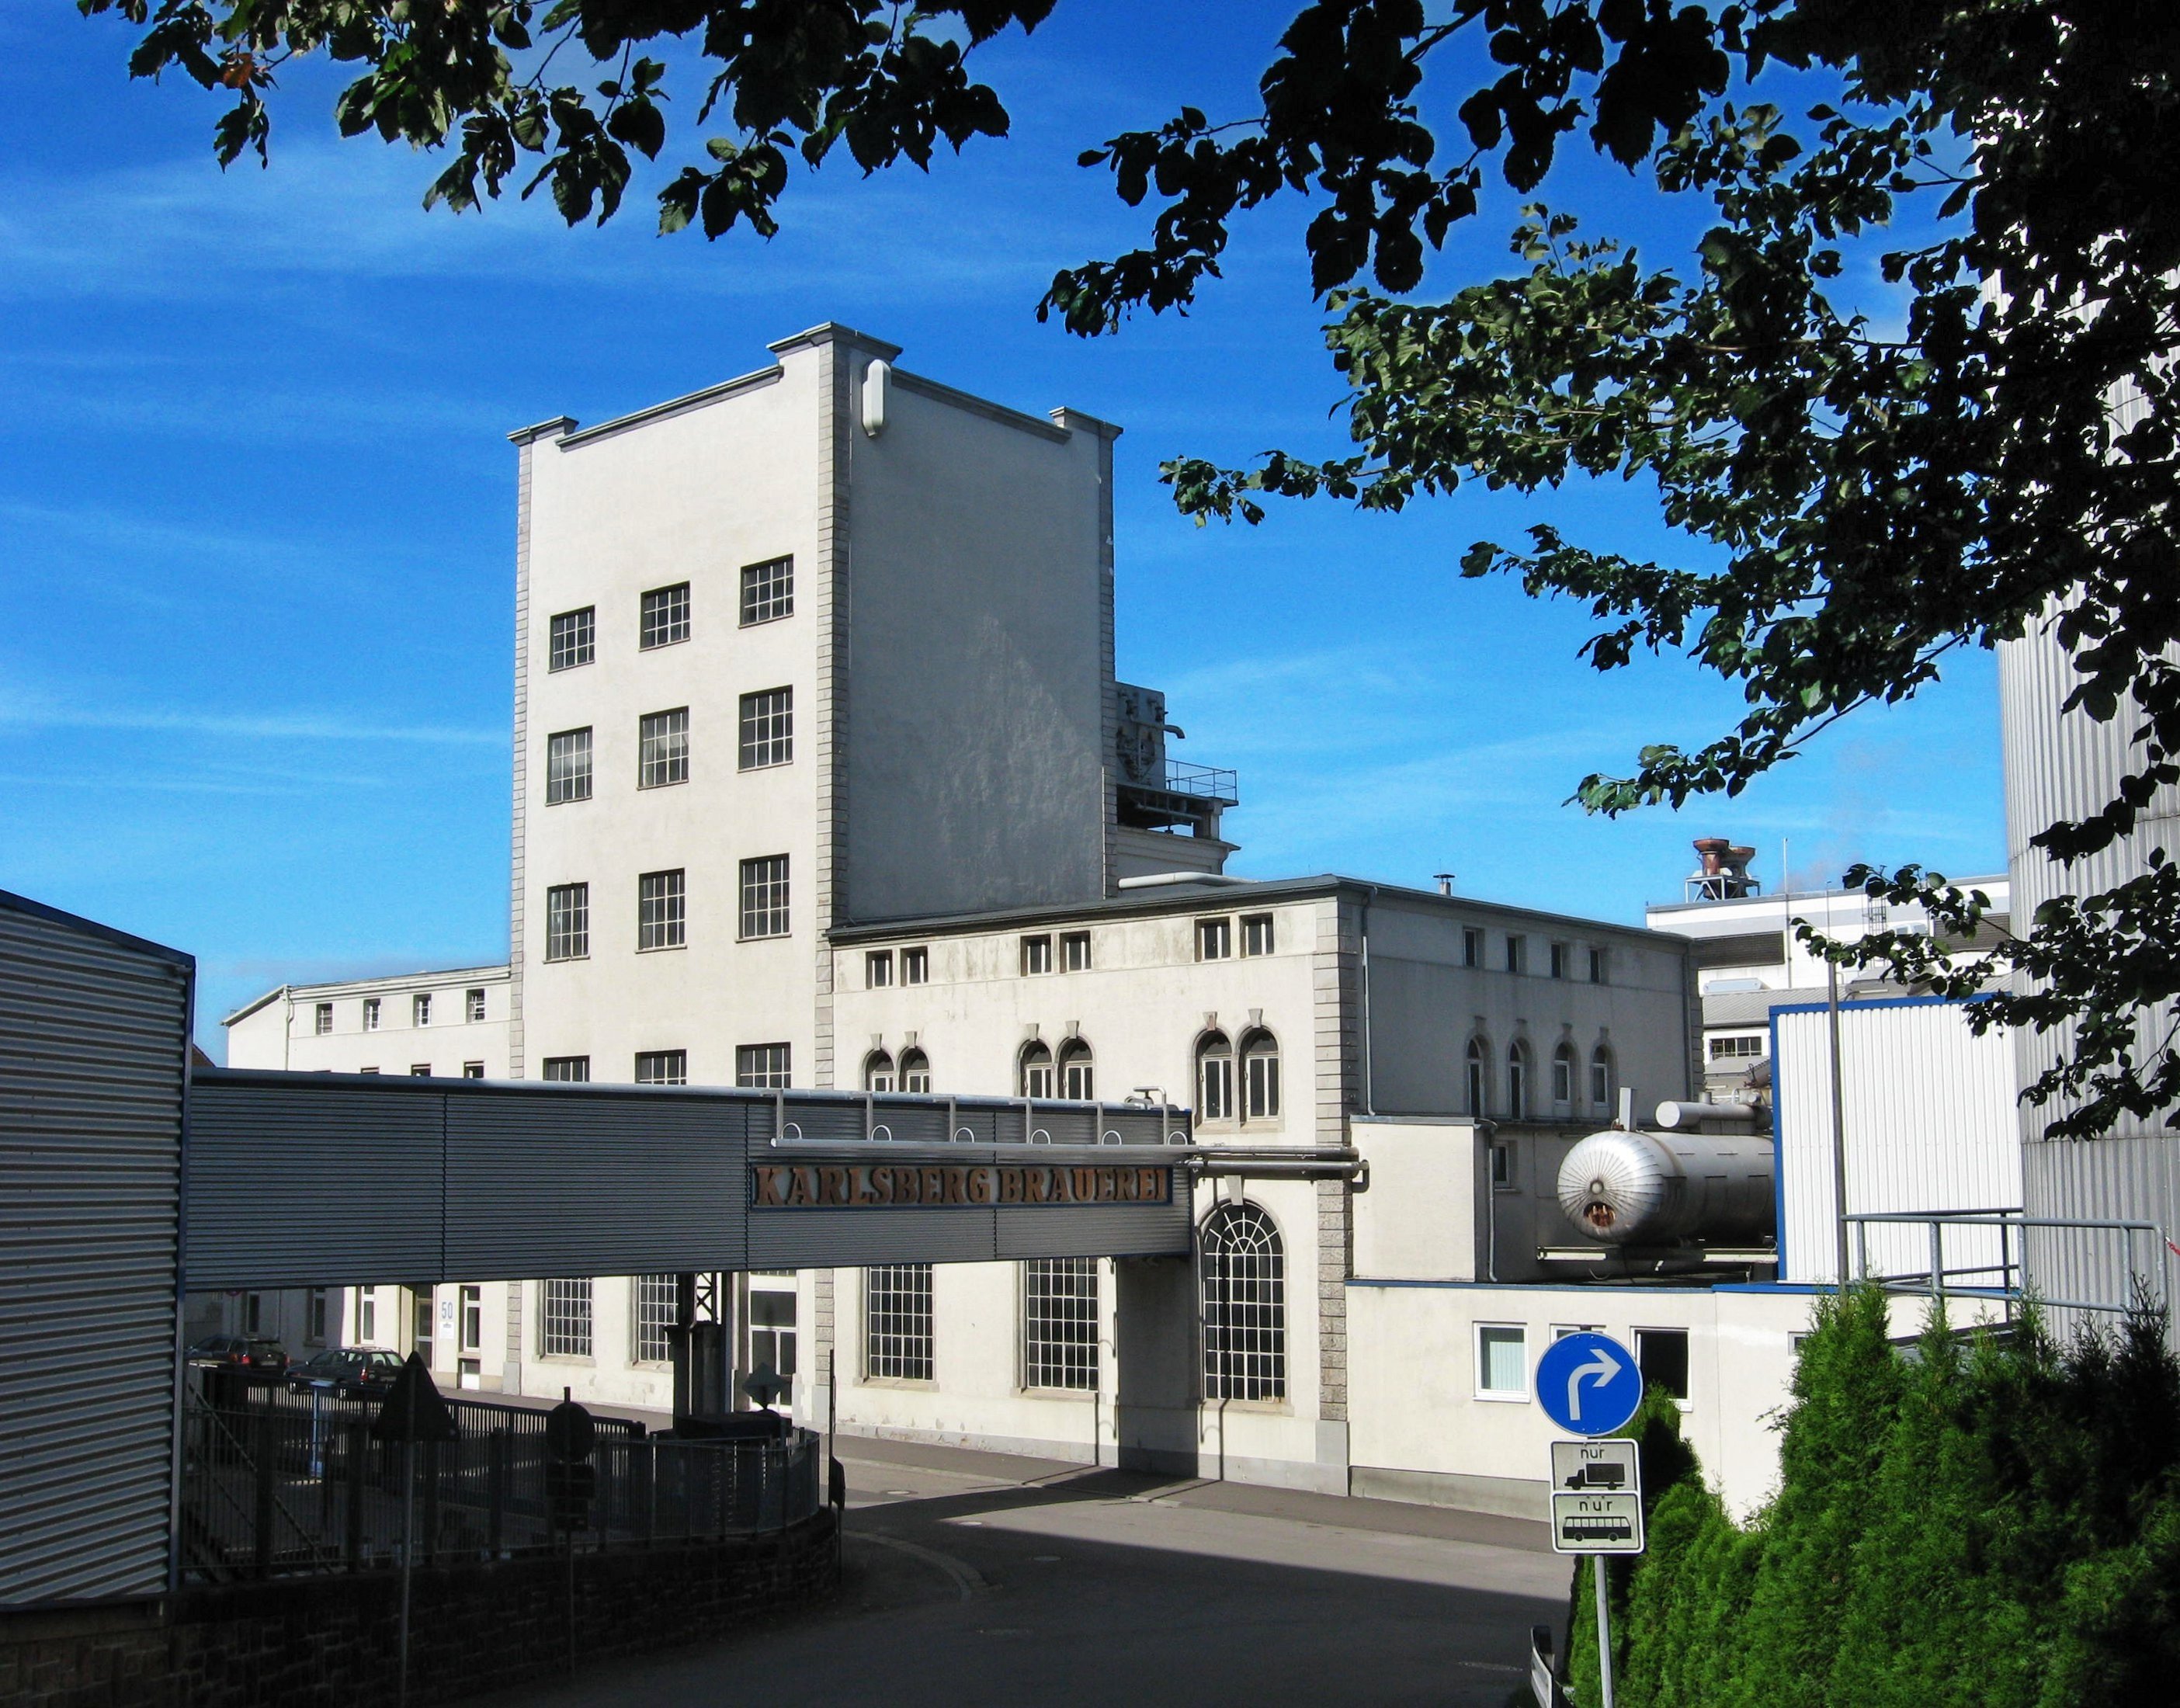 Karlsberg brewery from Germany